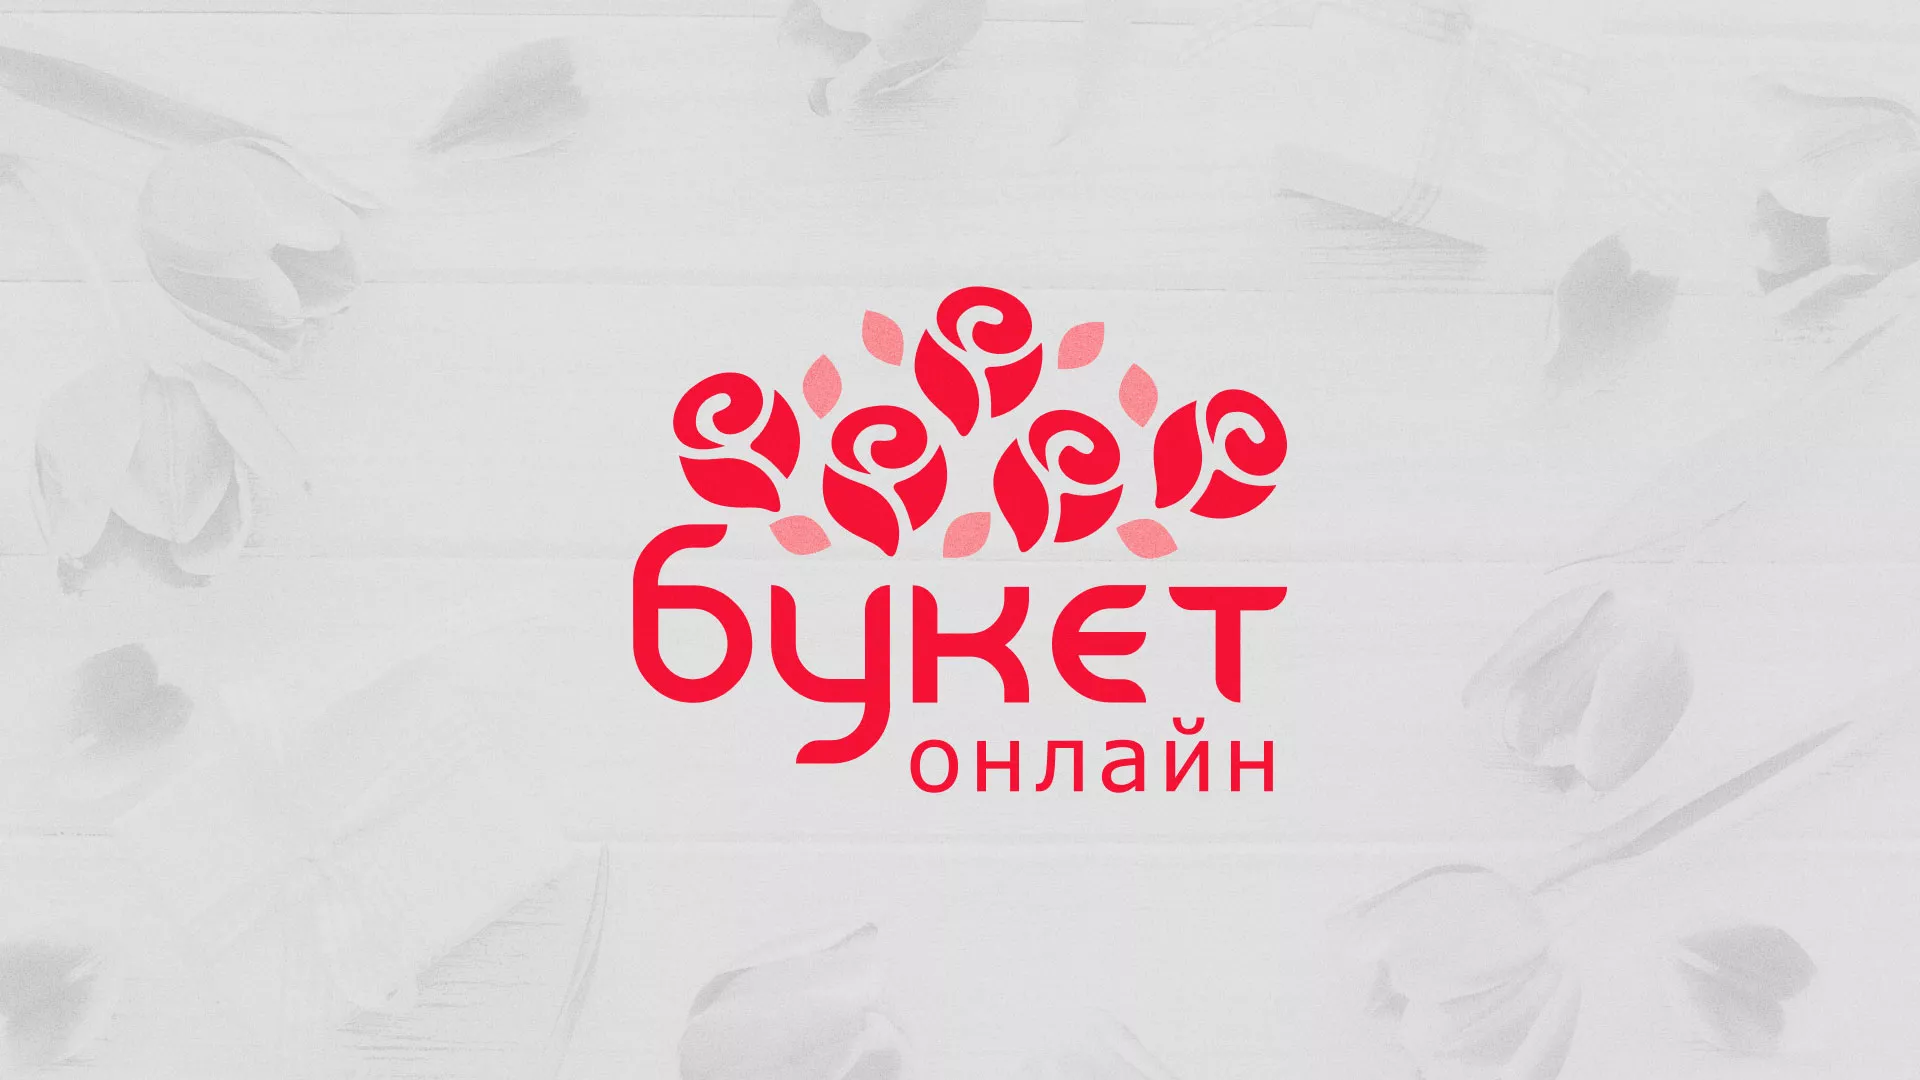 Создание интернет-магазина «Букет-онлайн» по цветам в Нюрбе